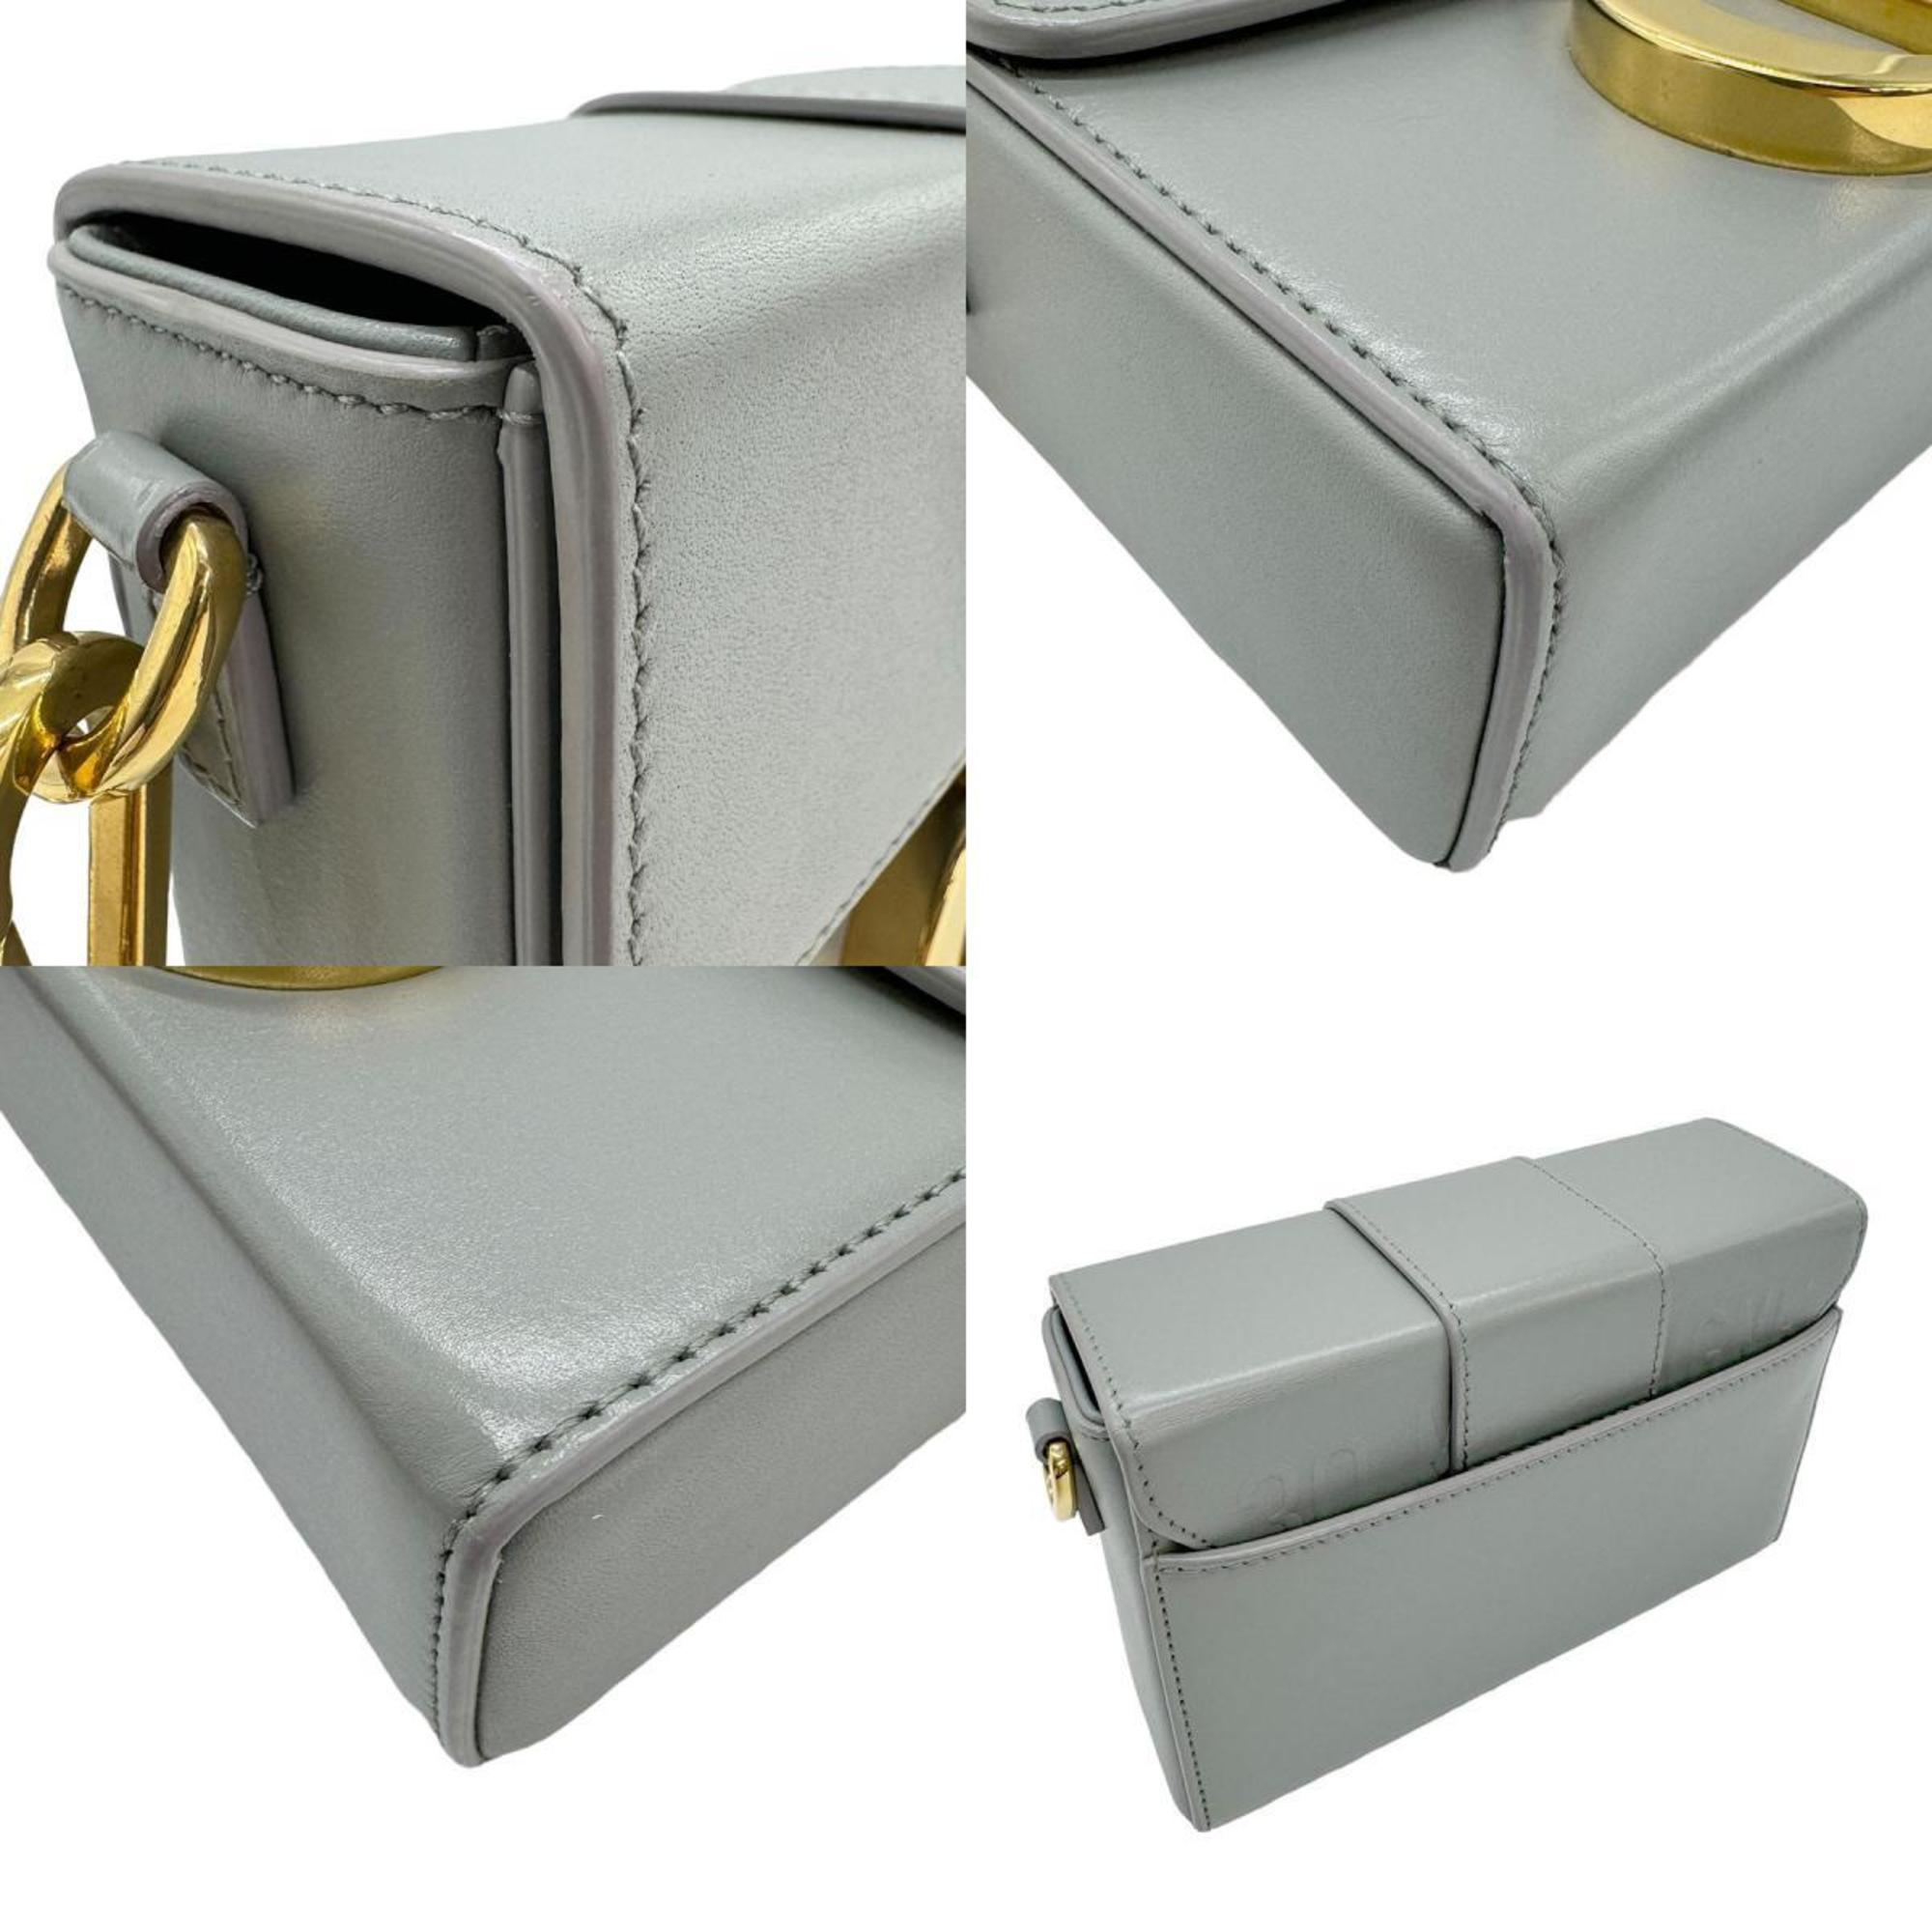 Christian Dior Shoulder Bag 30 Montaigne Leather Grey Women's z0837